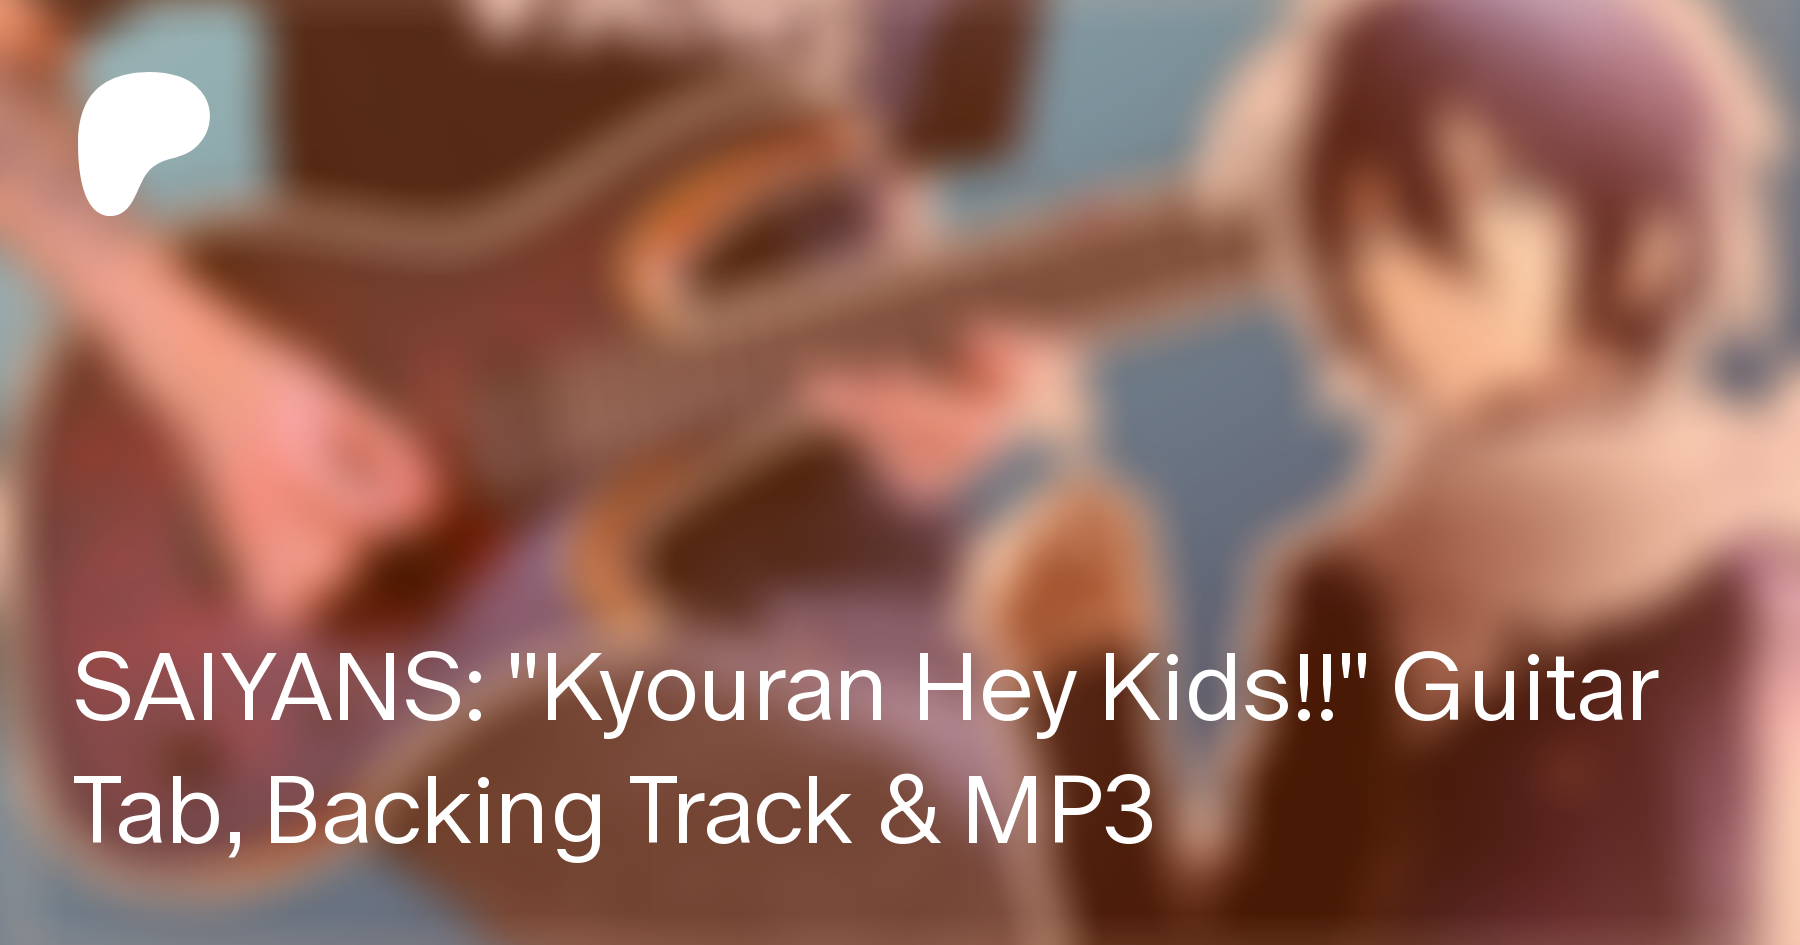 Saiyans Kyouran Hey Kids Guitar Tab Backing Track Mp3 Mattyyym On Patreon